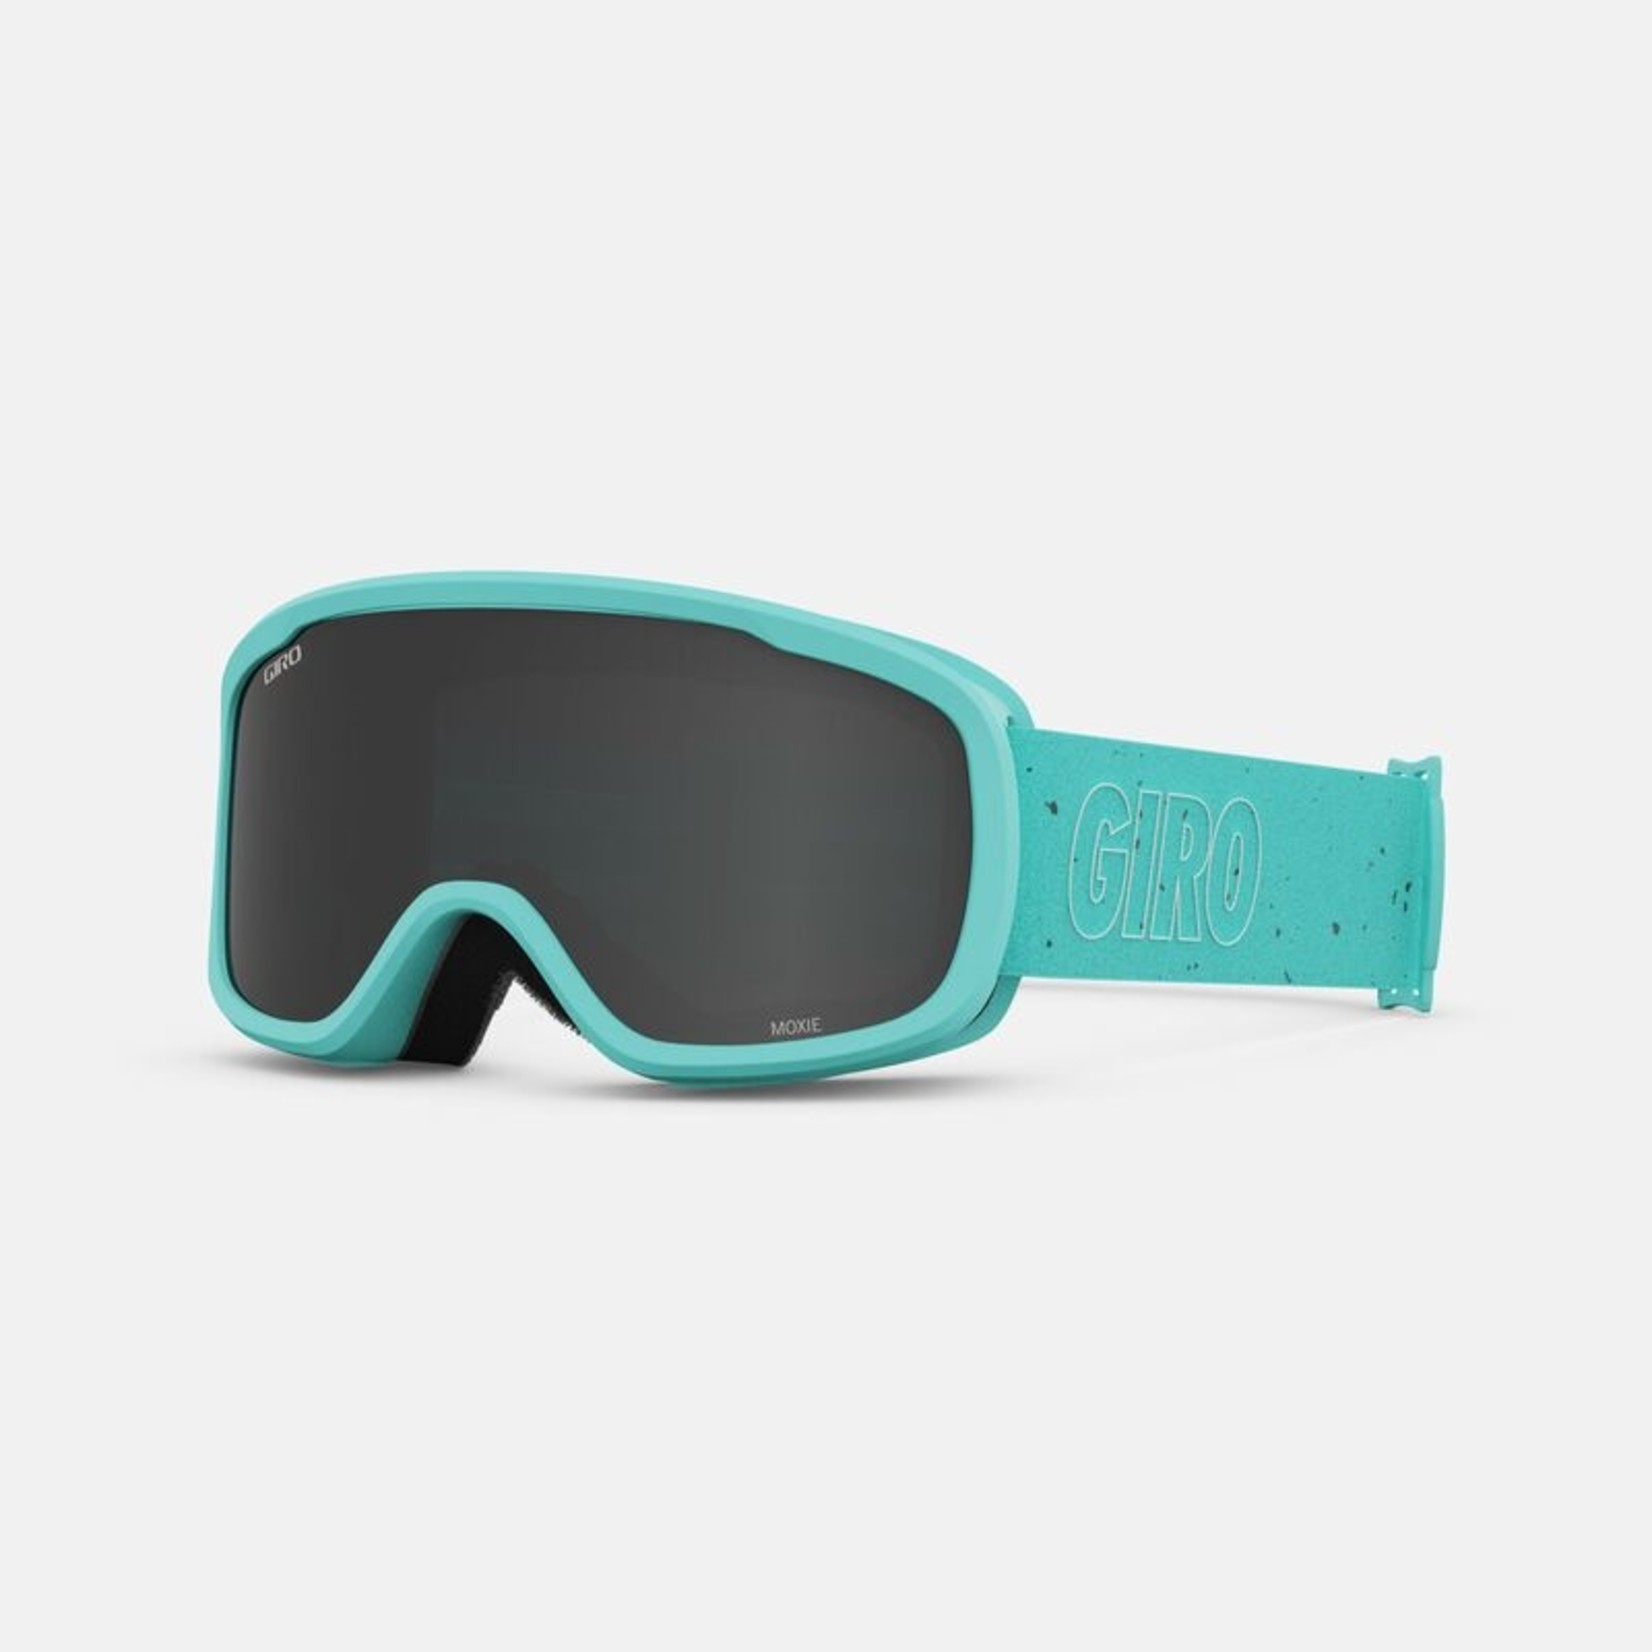 Giro Giro Moxie Ski Goggles,